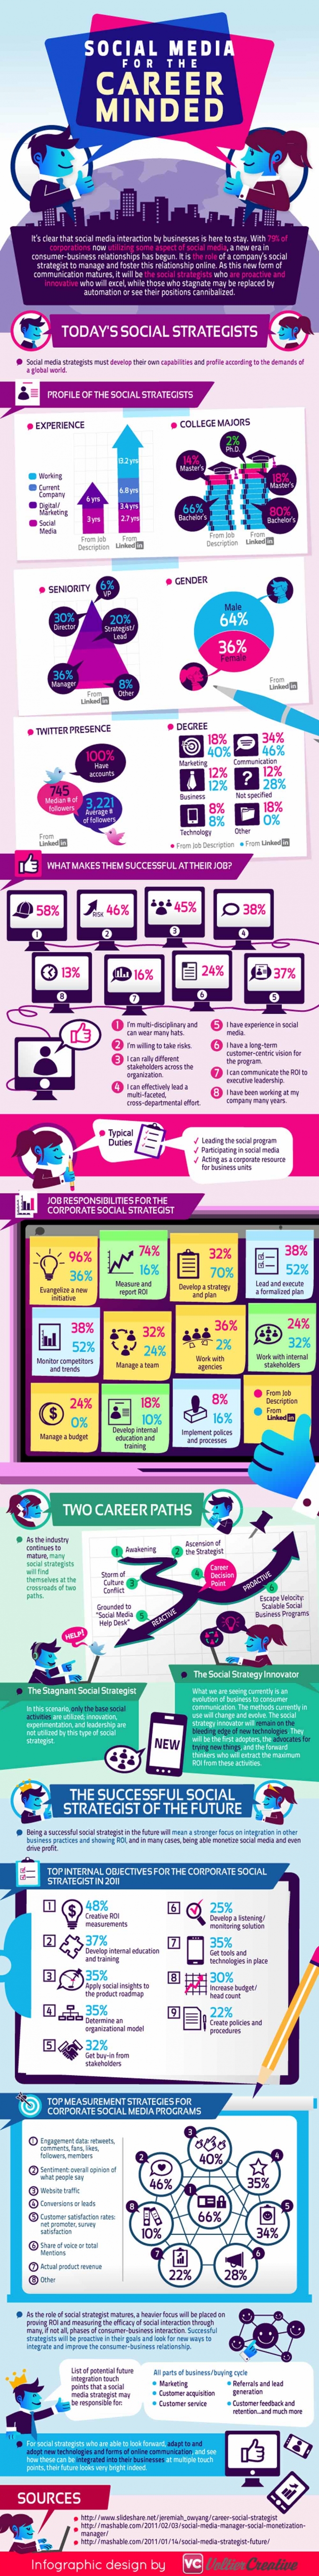 Social Media Manager als Traumjob – Wie sieht der Social Media Marketing Stratege der Zukunft aus? [Infografik] 